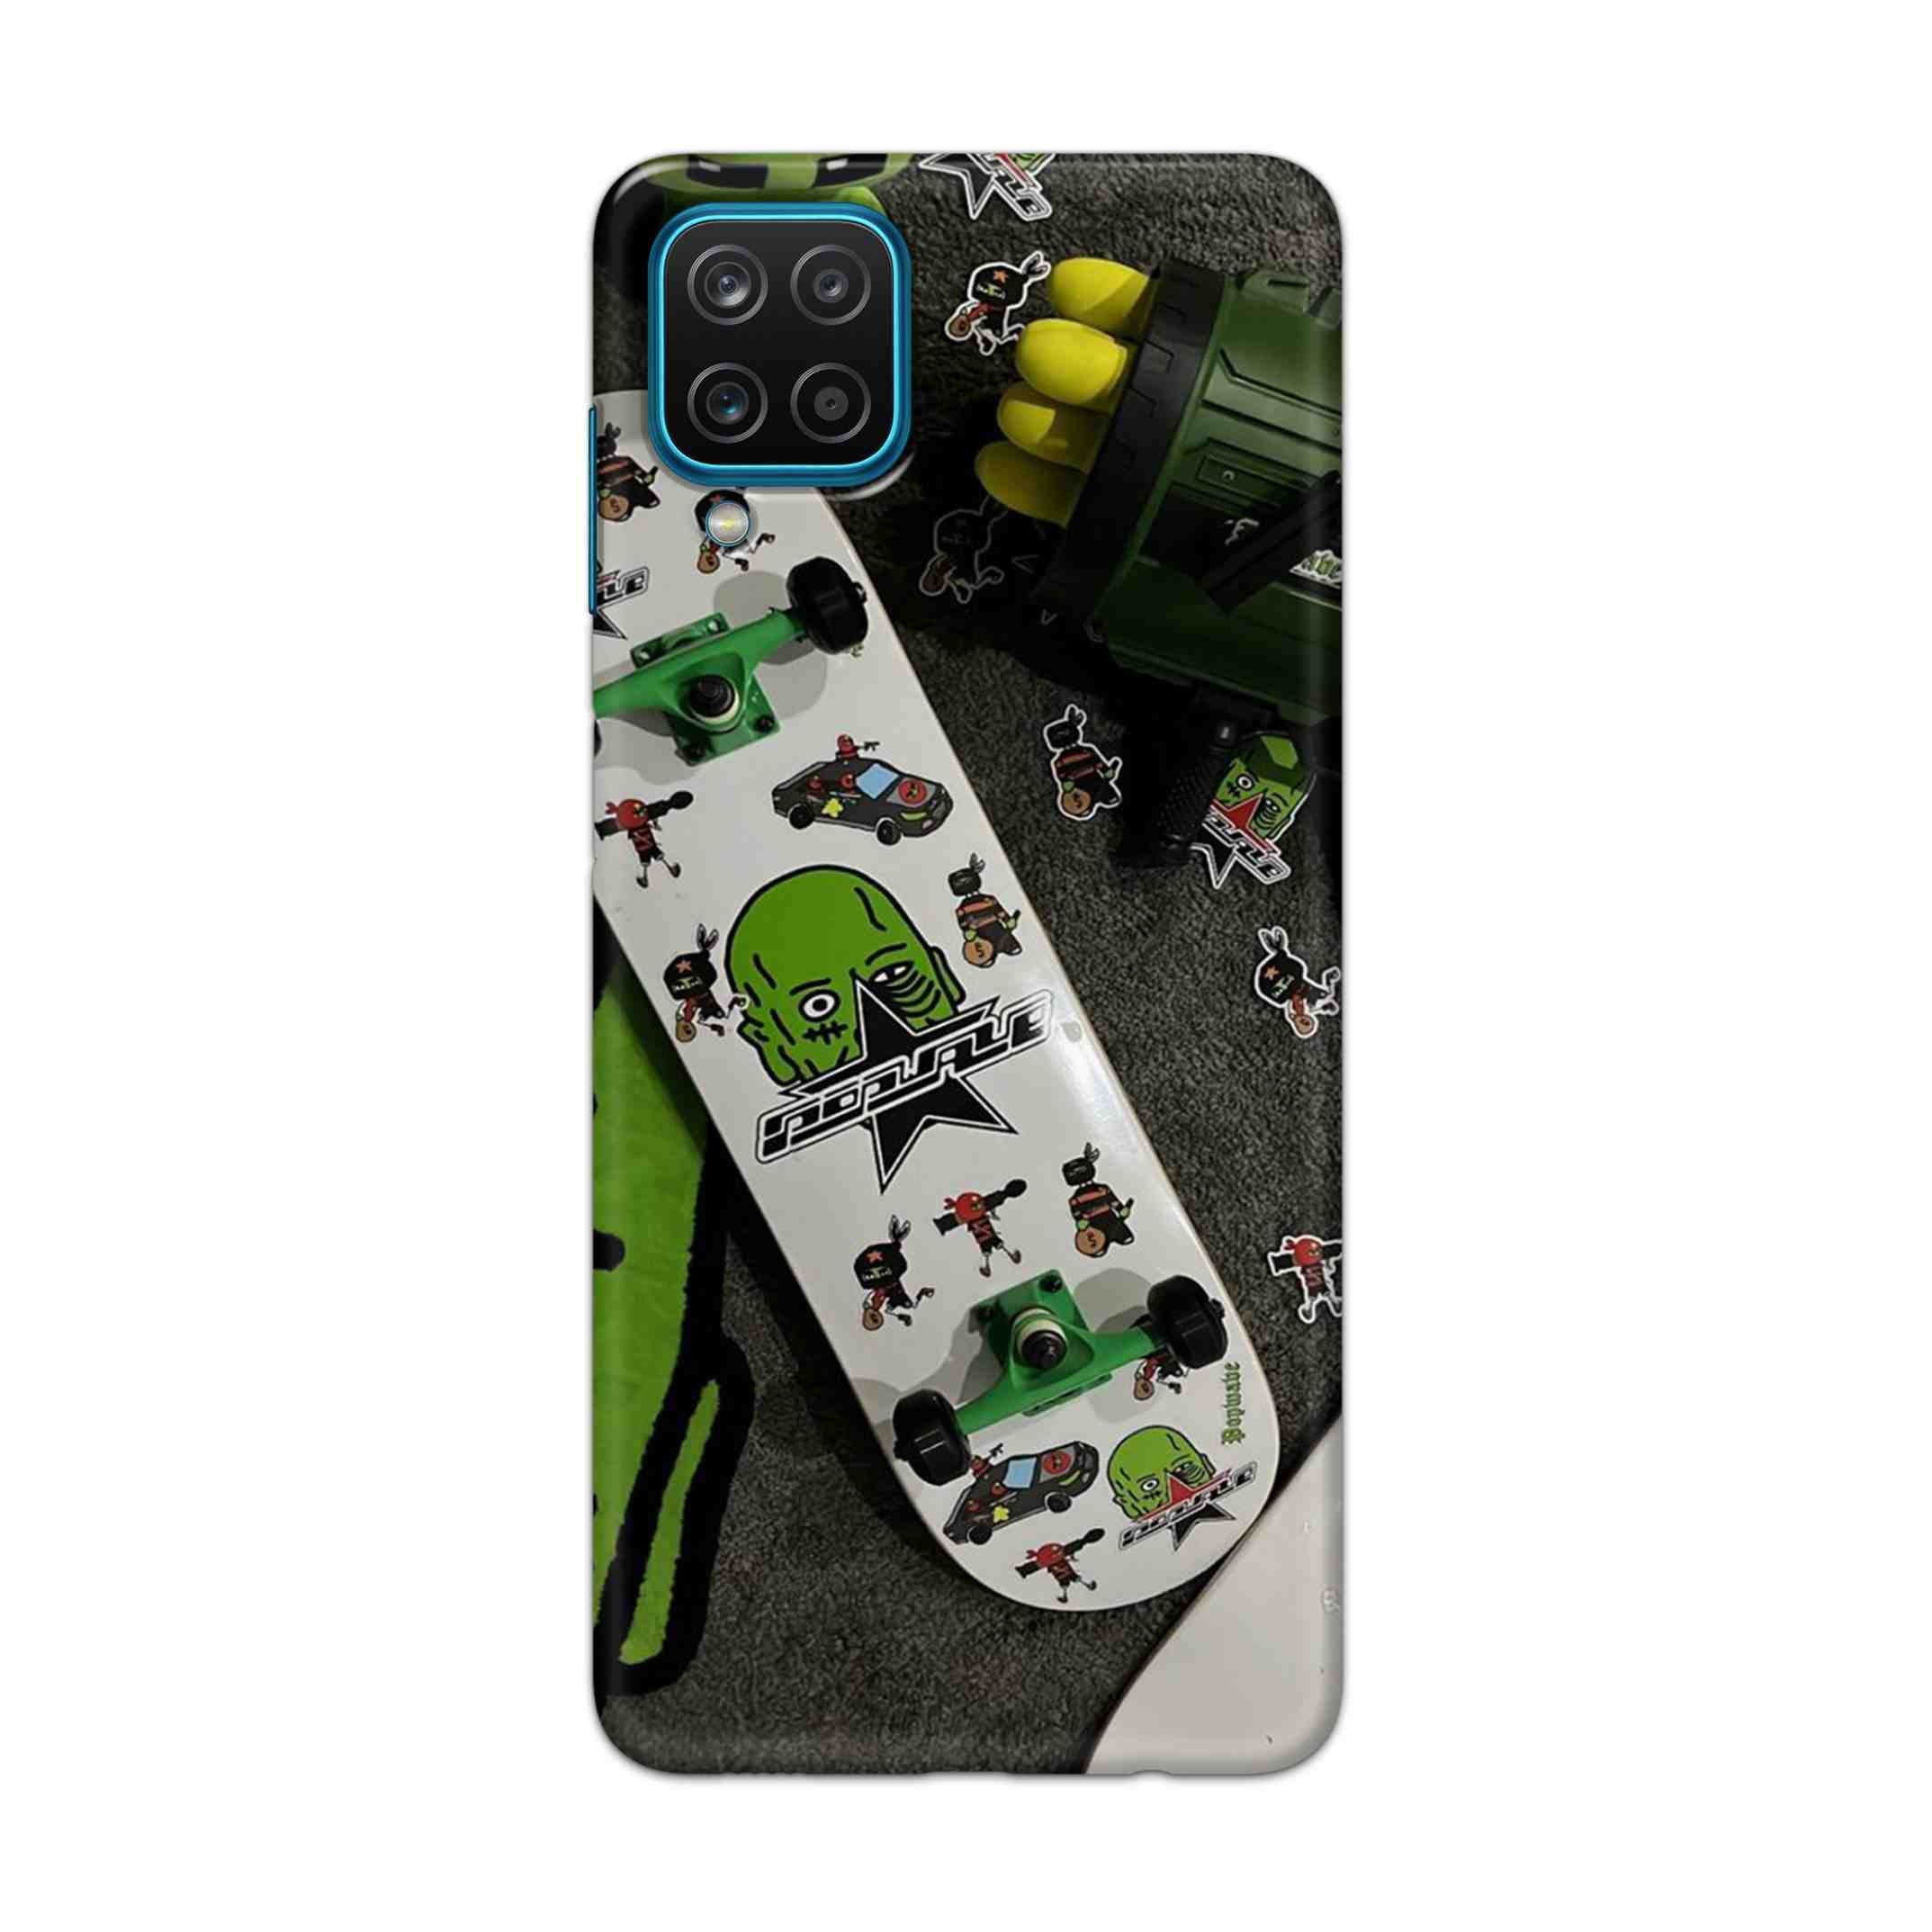 Buy Hulk Skateboard Hard Back Mobile Phone Case Cover For Samsung Galaxy A12 Online